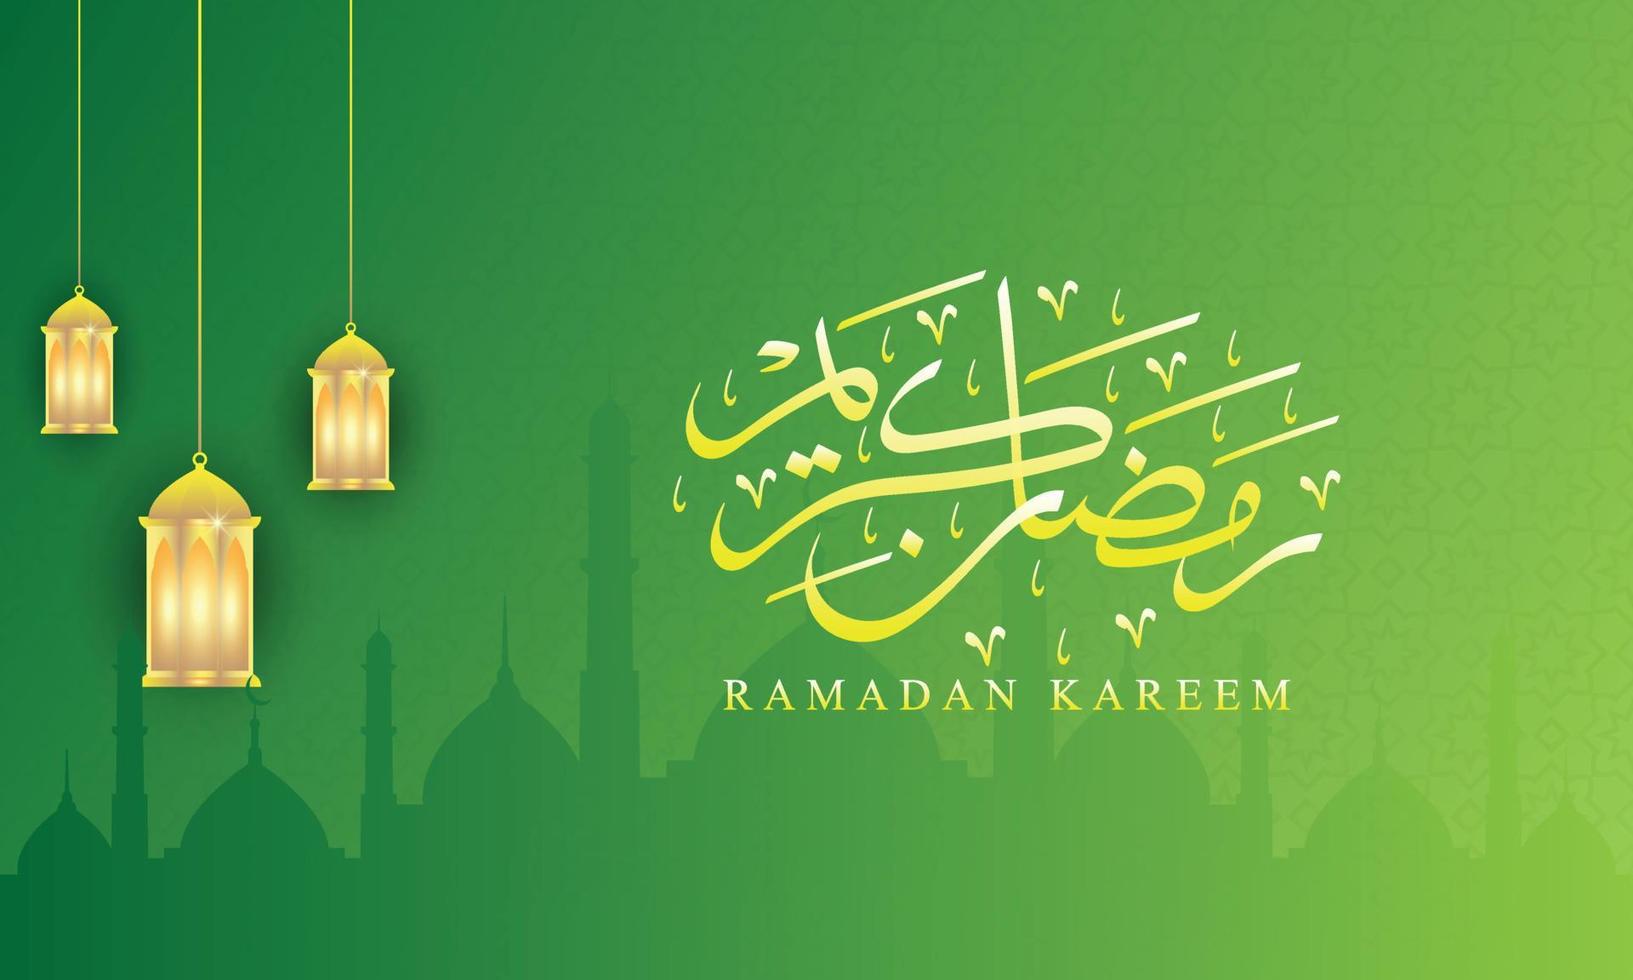 Ramadan kareem design with arabic calligraphy, lantern, mosque and pattern background vector